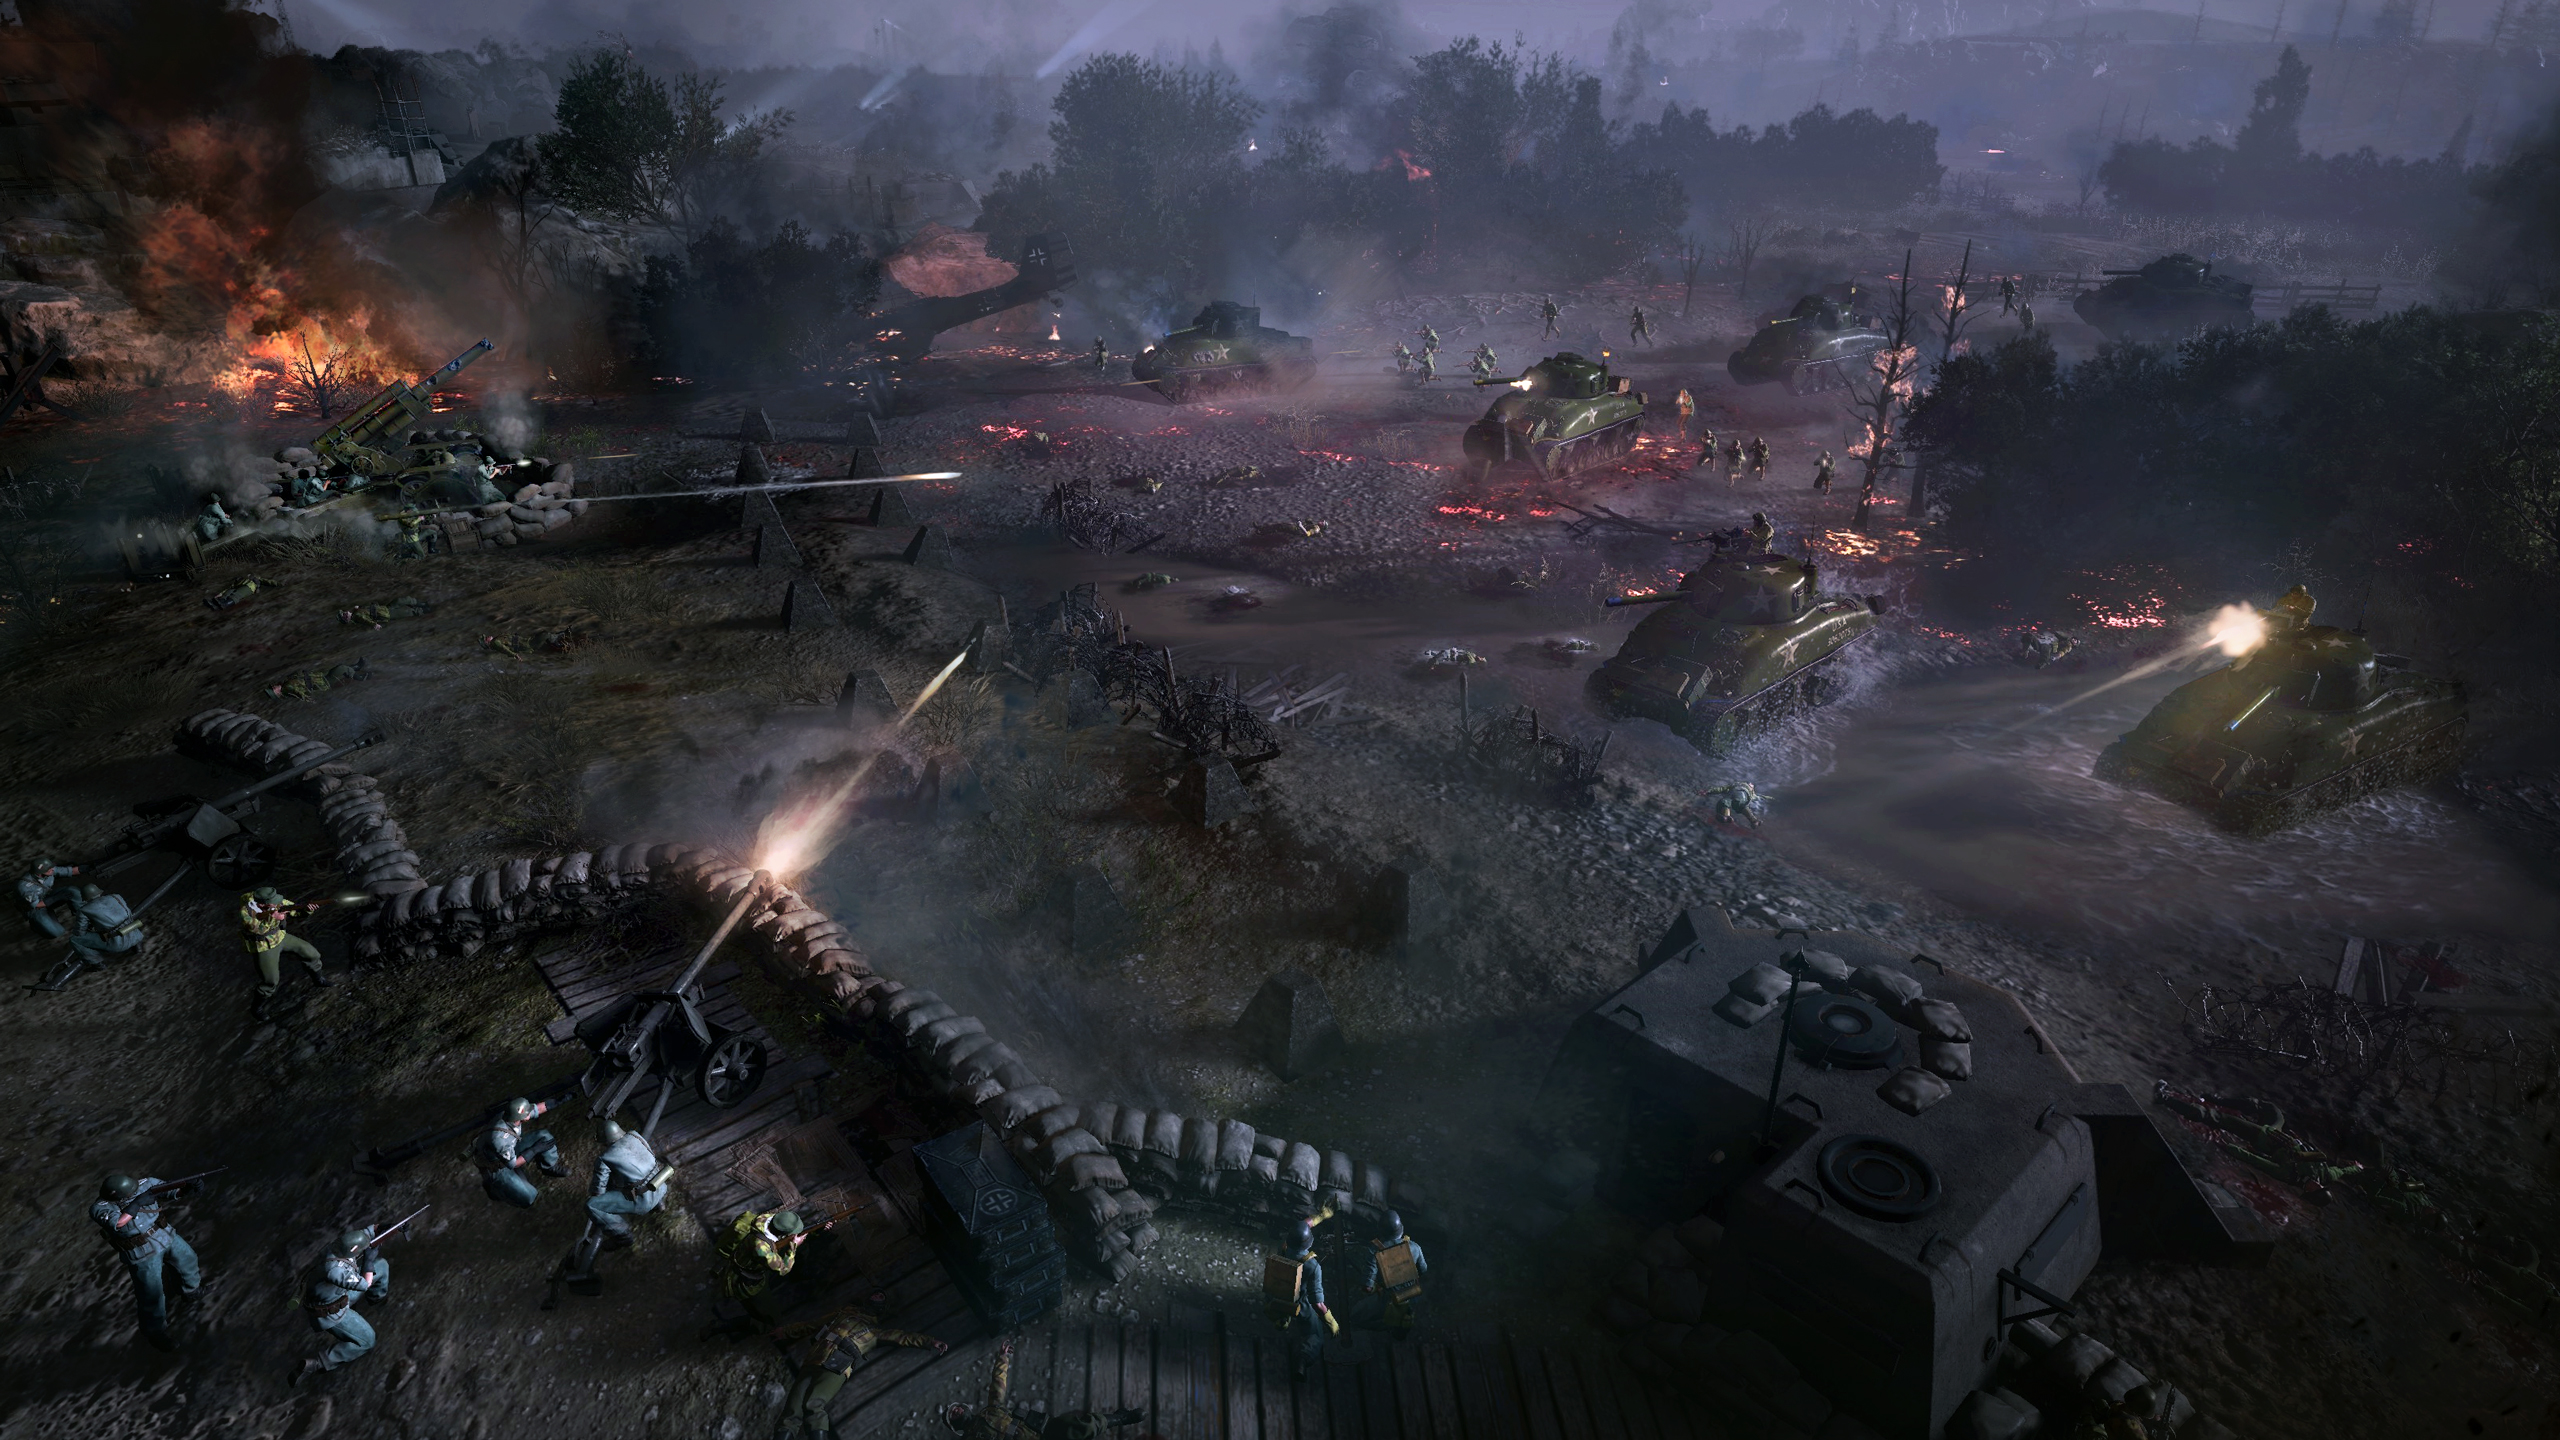 Sherman tanks advance across a darkend battlefield, guns blazing at German troops hunkered behind barricades